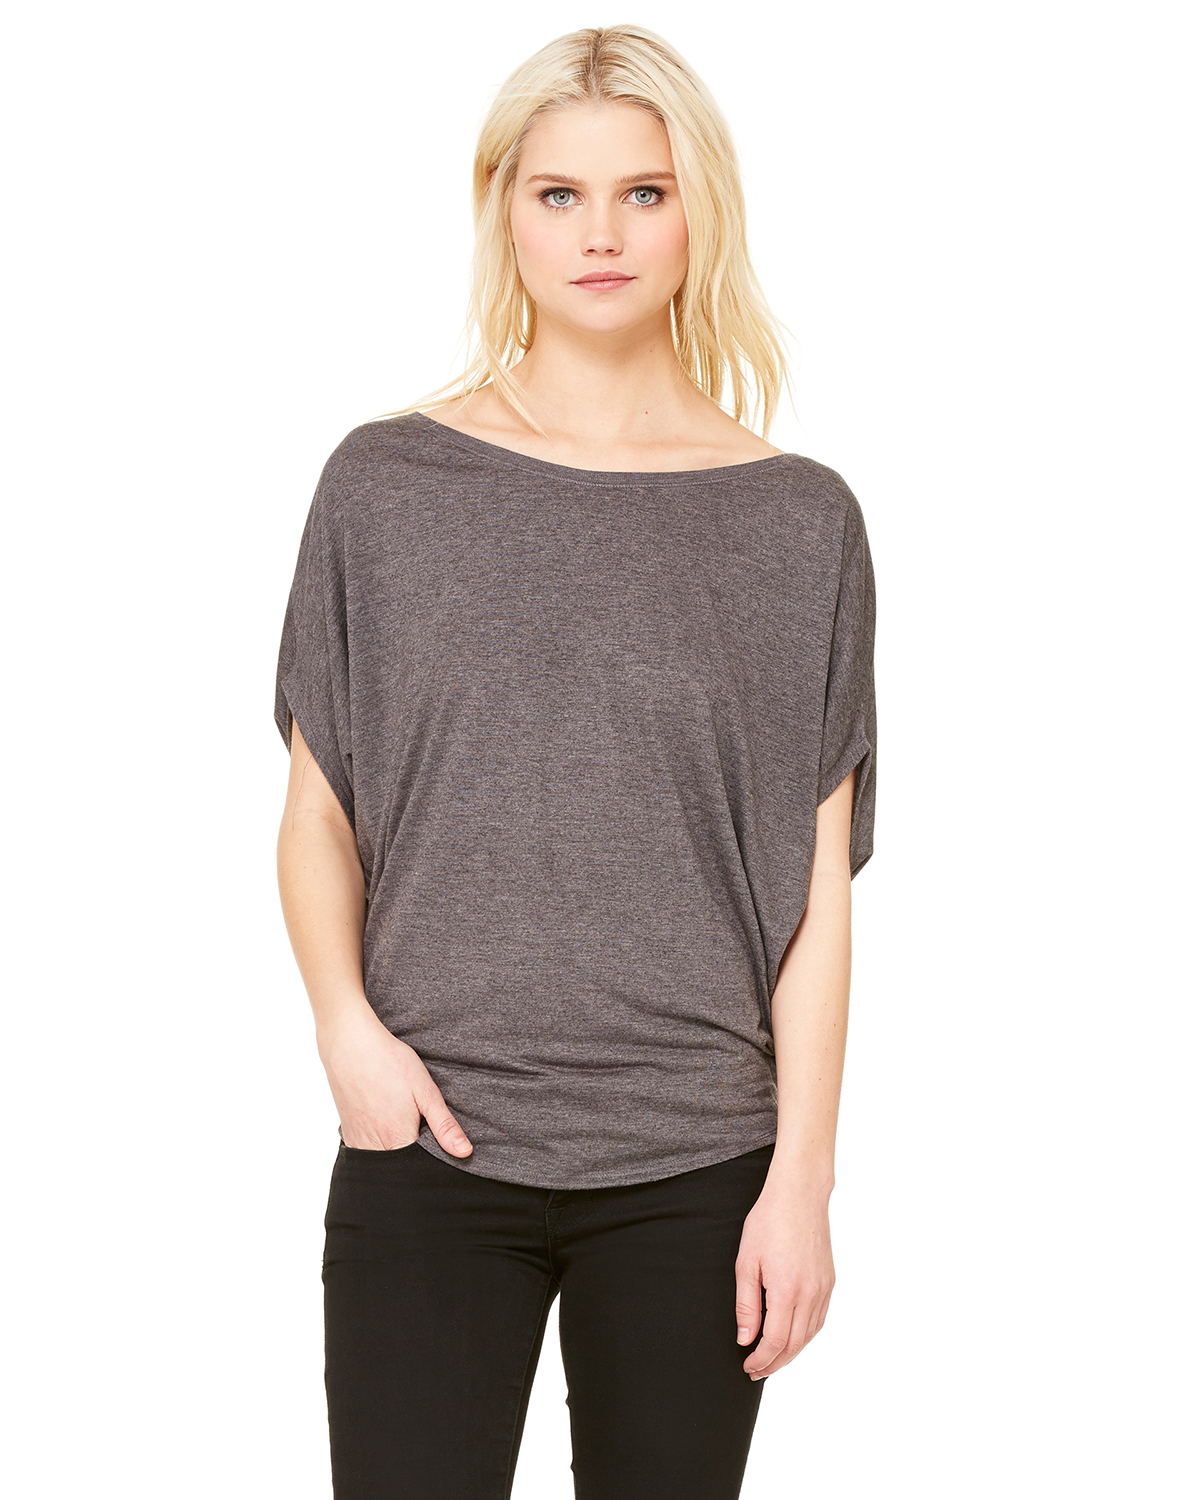 Bella 8806 - Ladies' Flowy Circle Top $9.50 - Women's T-Shirts